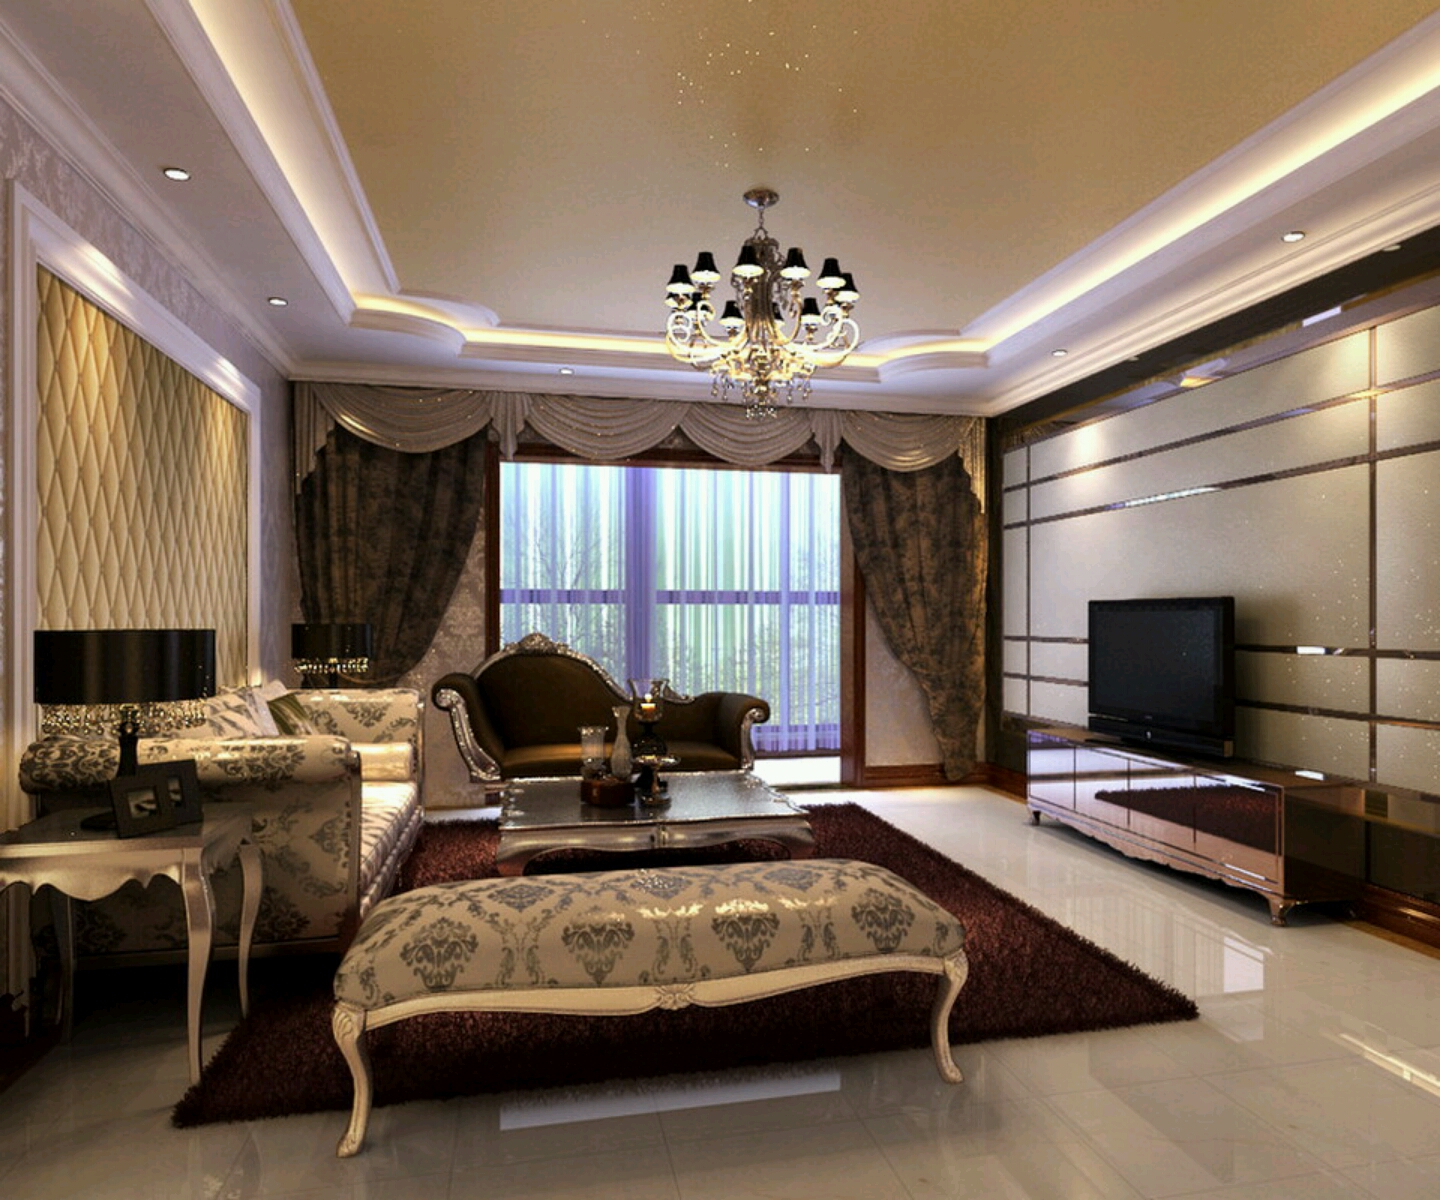  latest.: Luxury homes interior decoration living room designs ideas